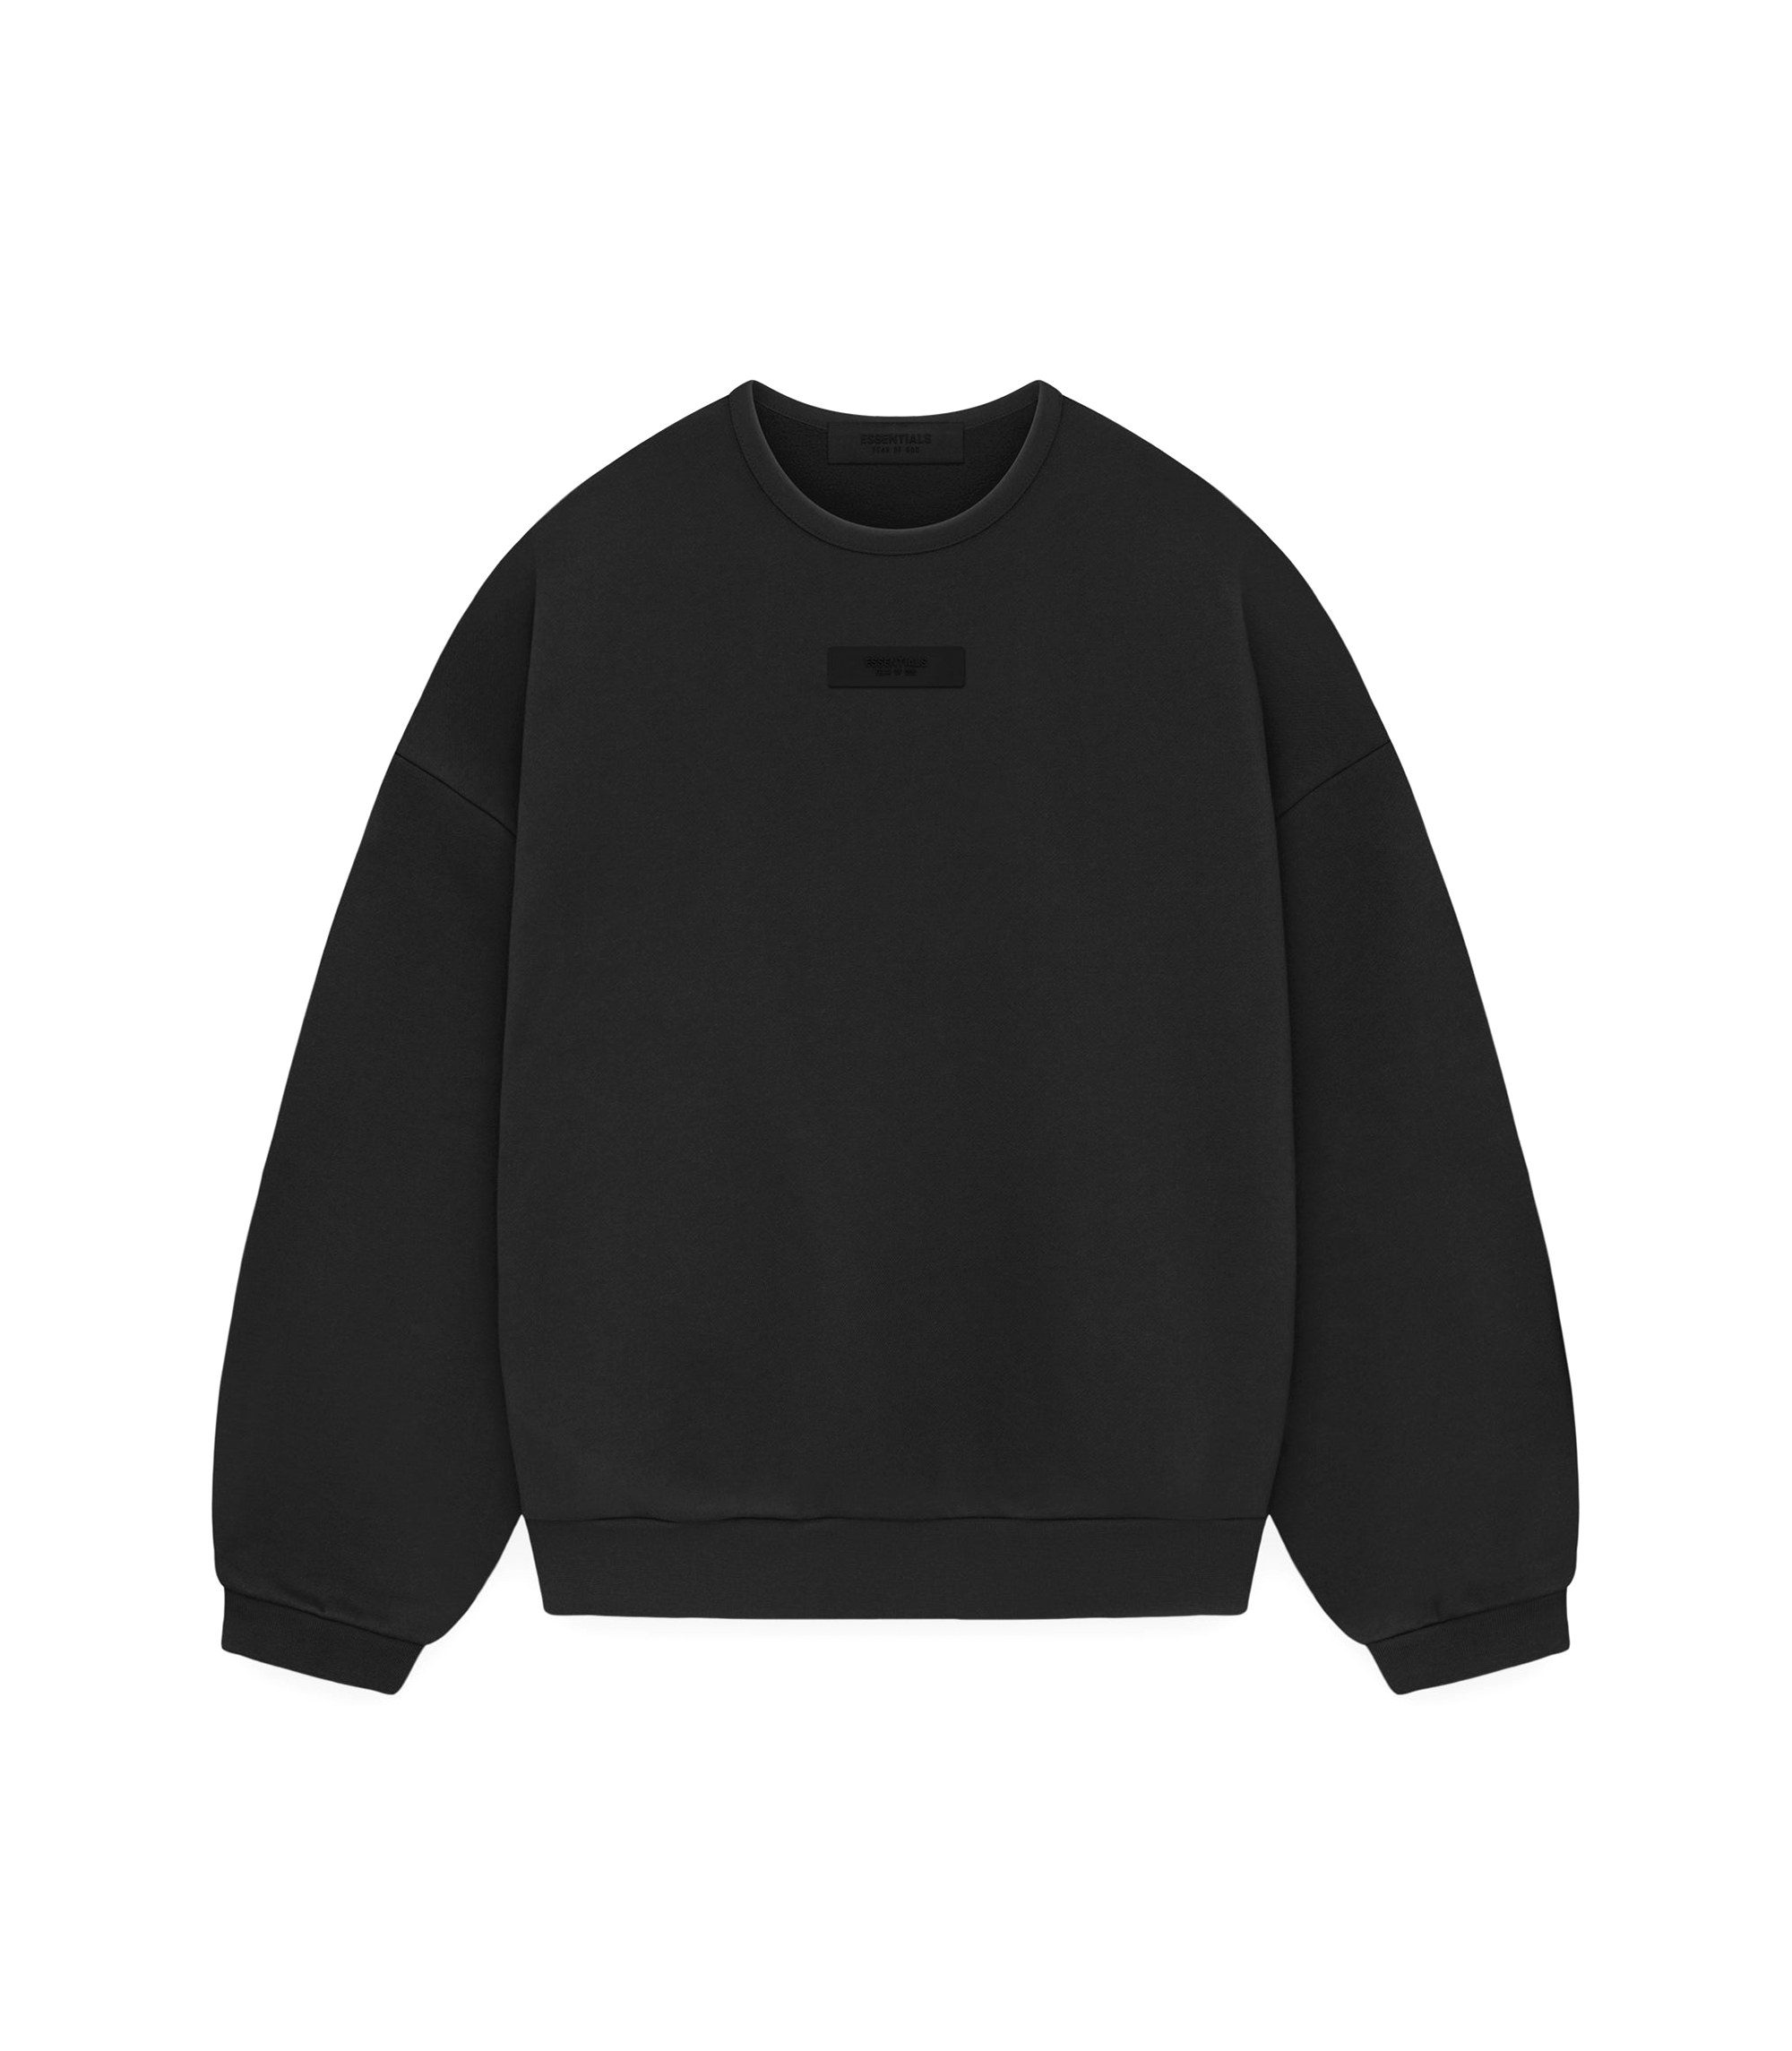 Essentials Crewneck Sweater - Jet Black